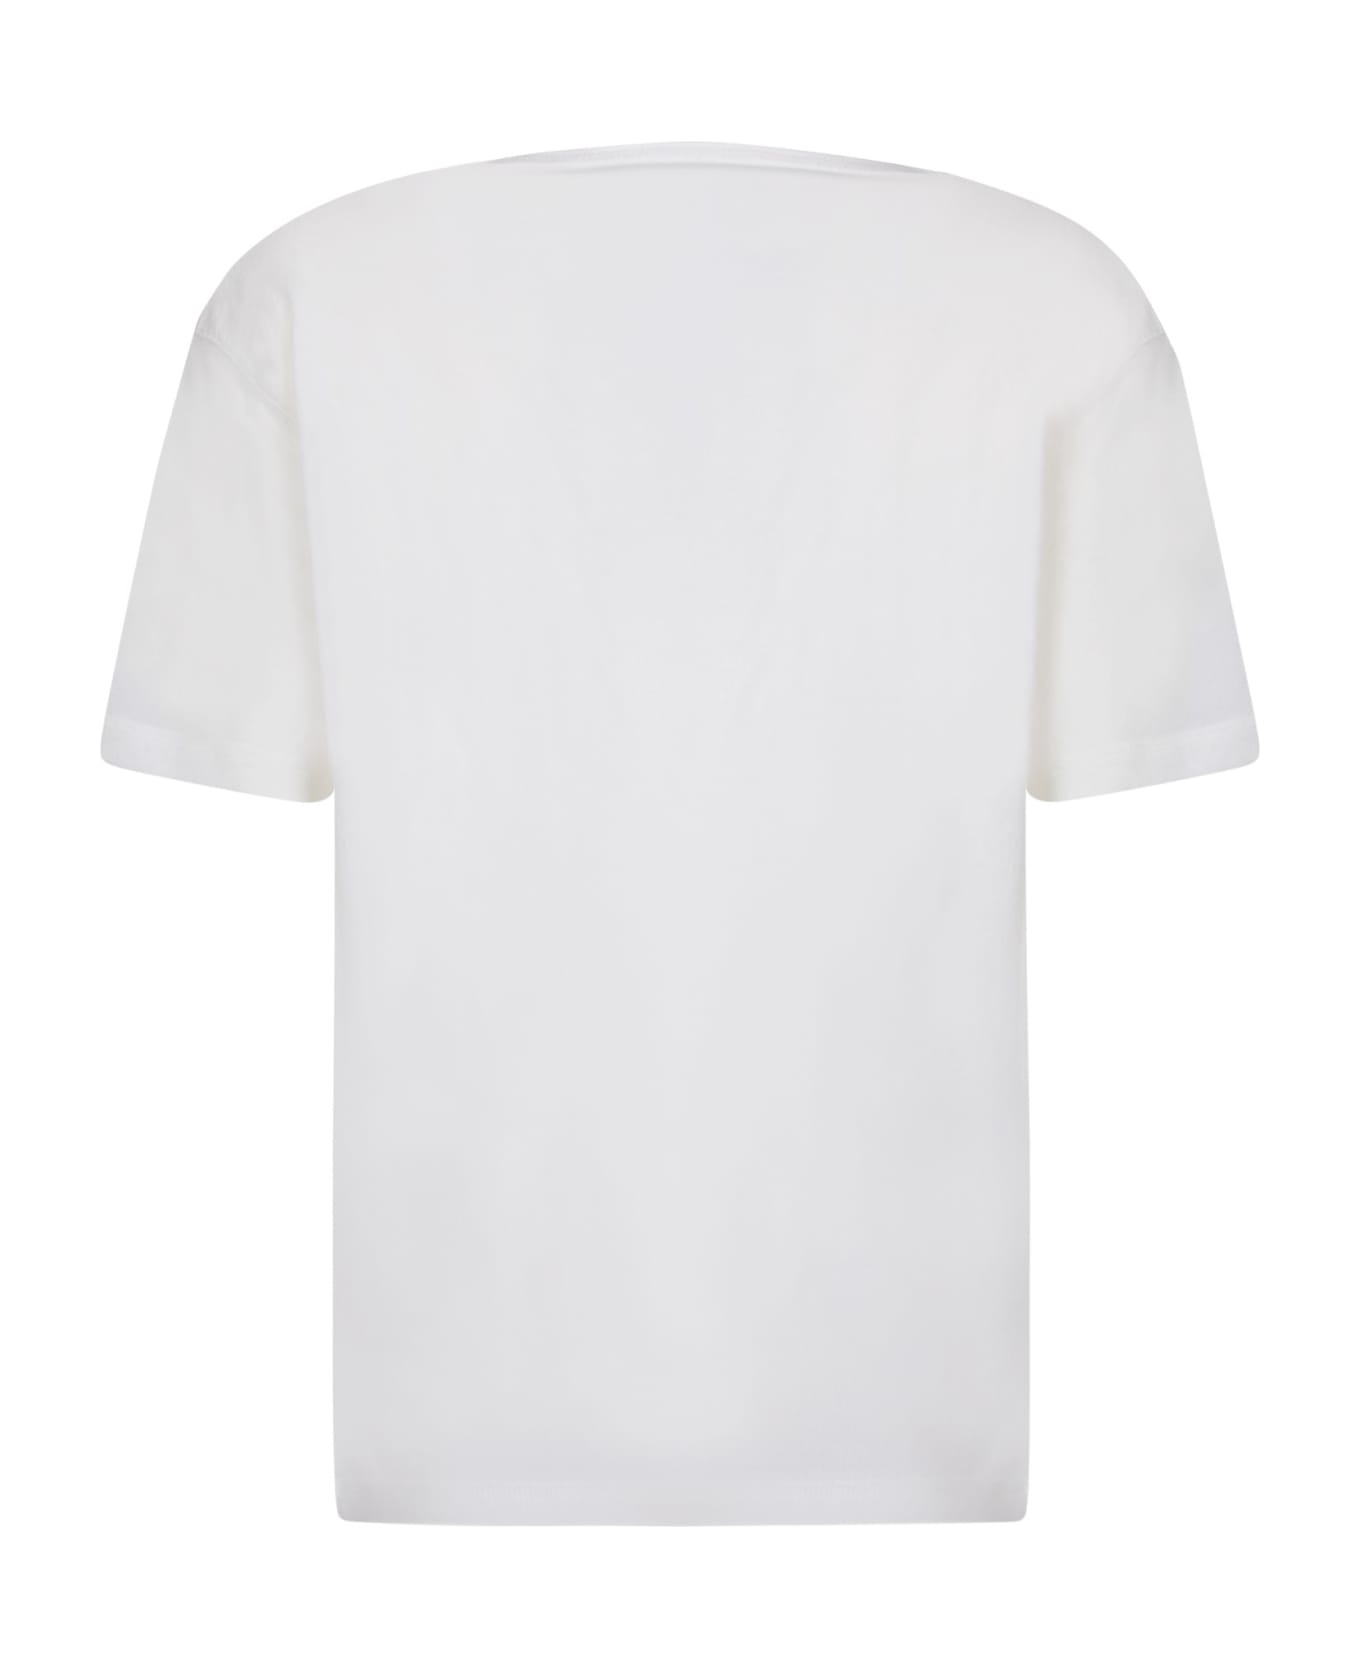 costumein Liam White T-shirt By Costumein - White